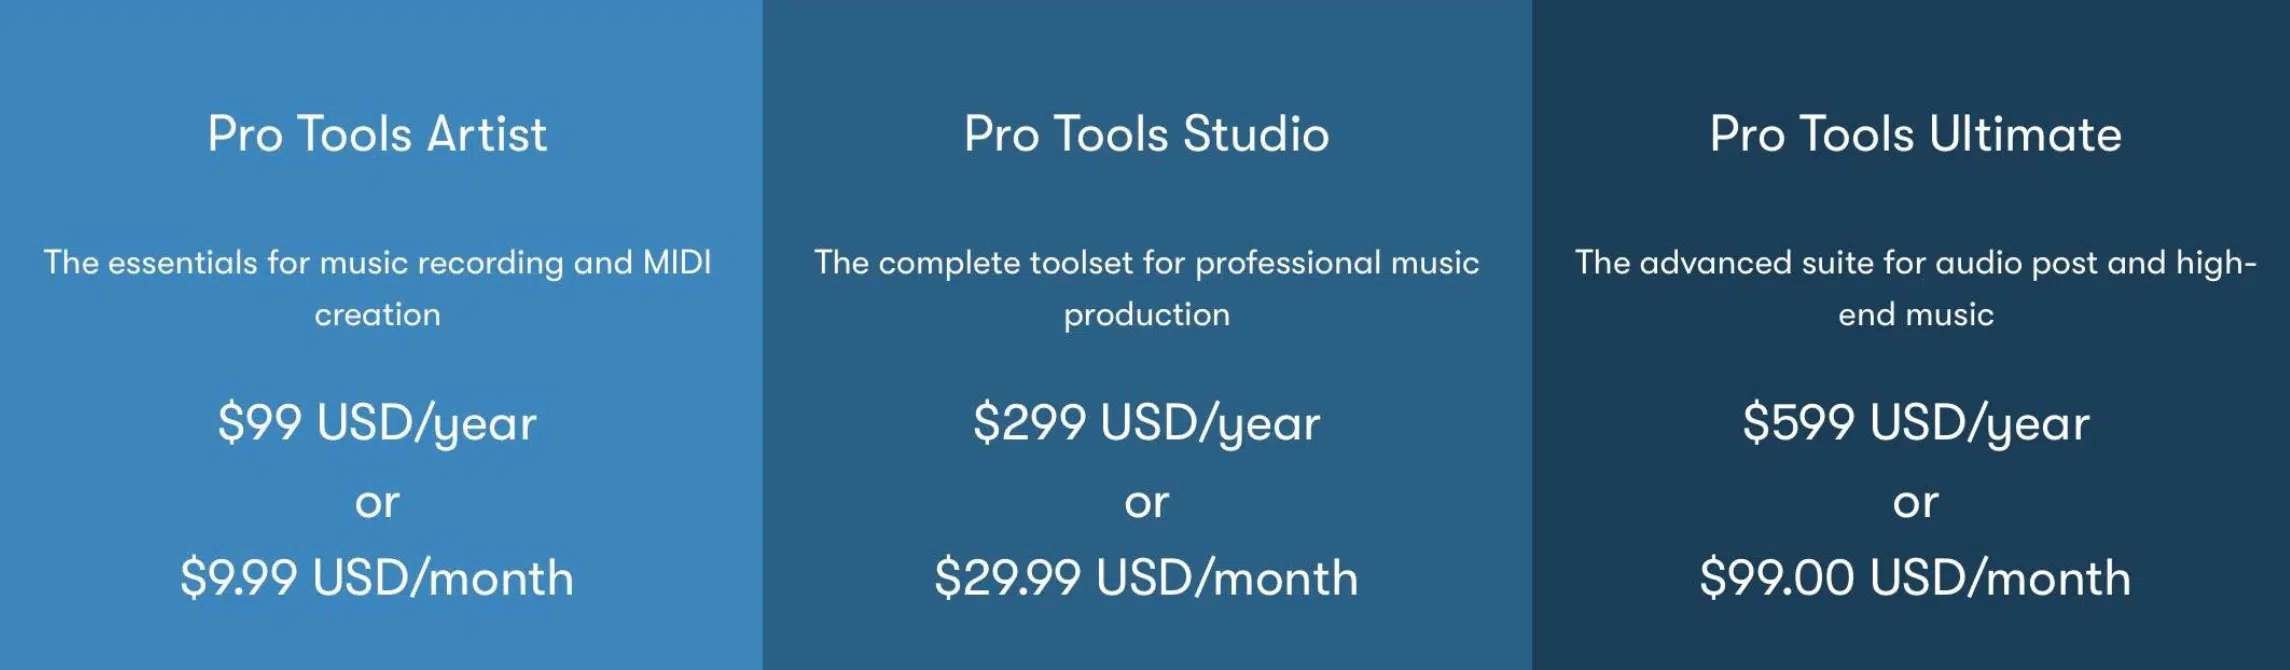 Pro Tools Pricing - Unison